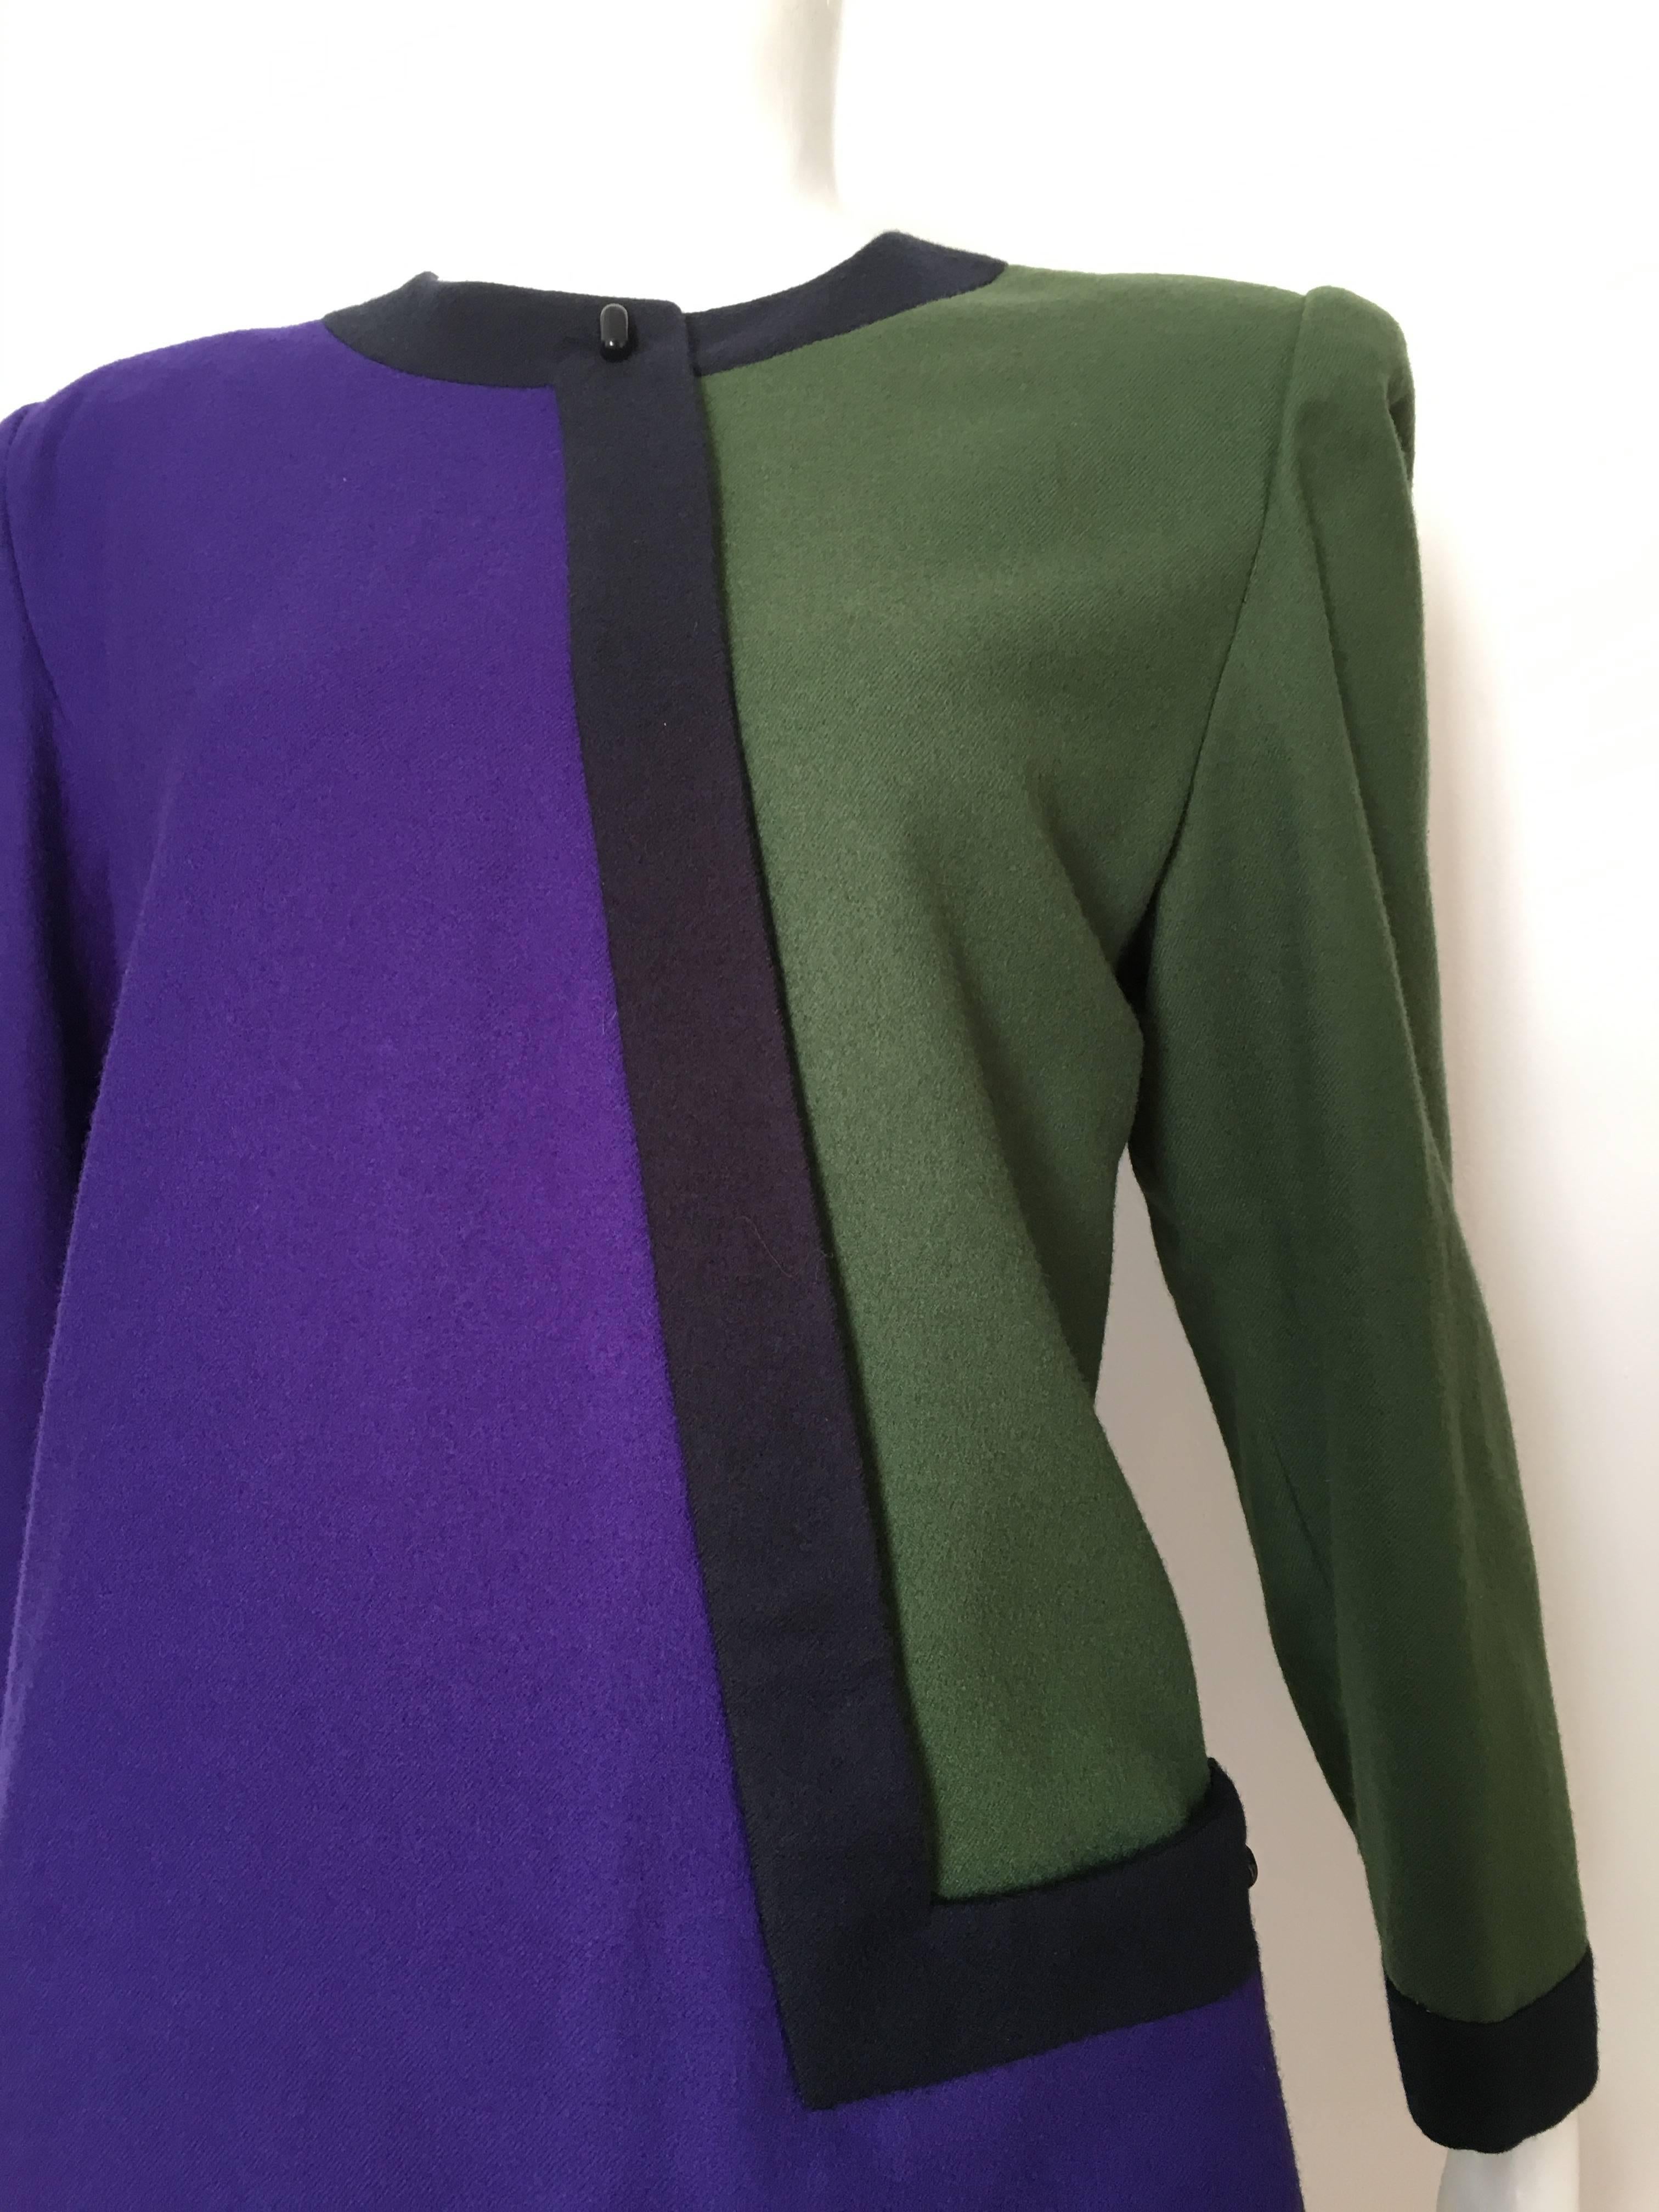 Purple Nina Ricci 1970s Modern Abstract Wool Dress Size 10.  For Sale